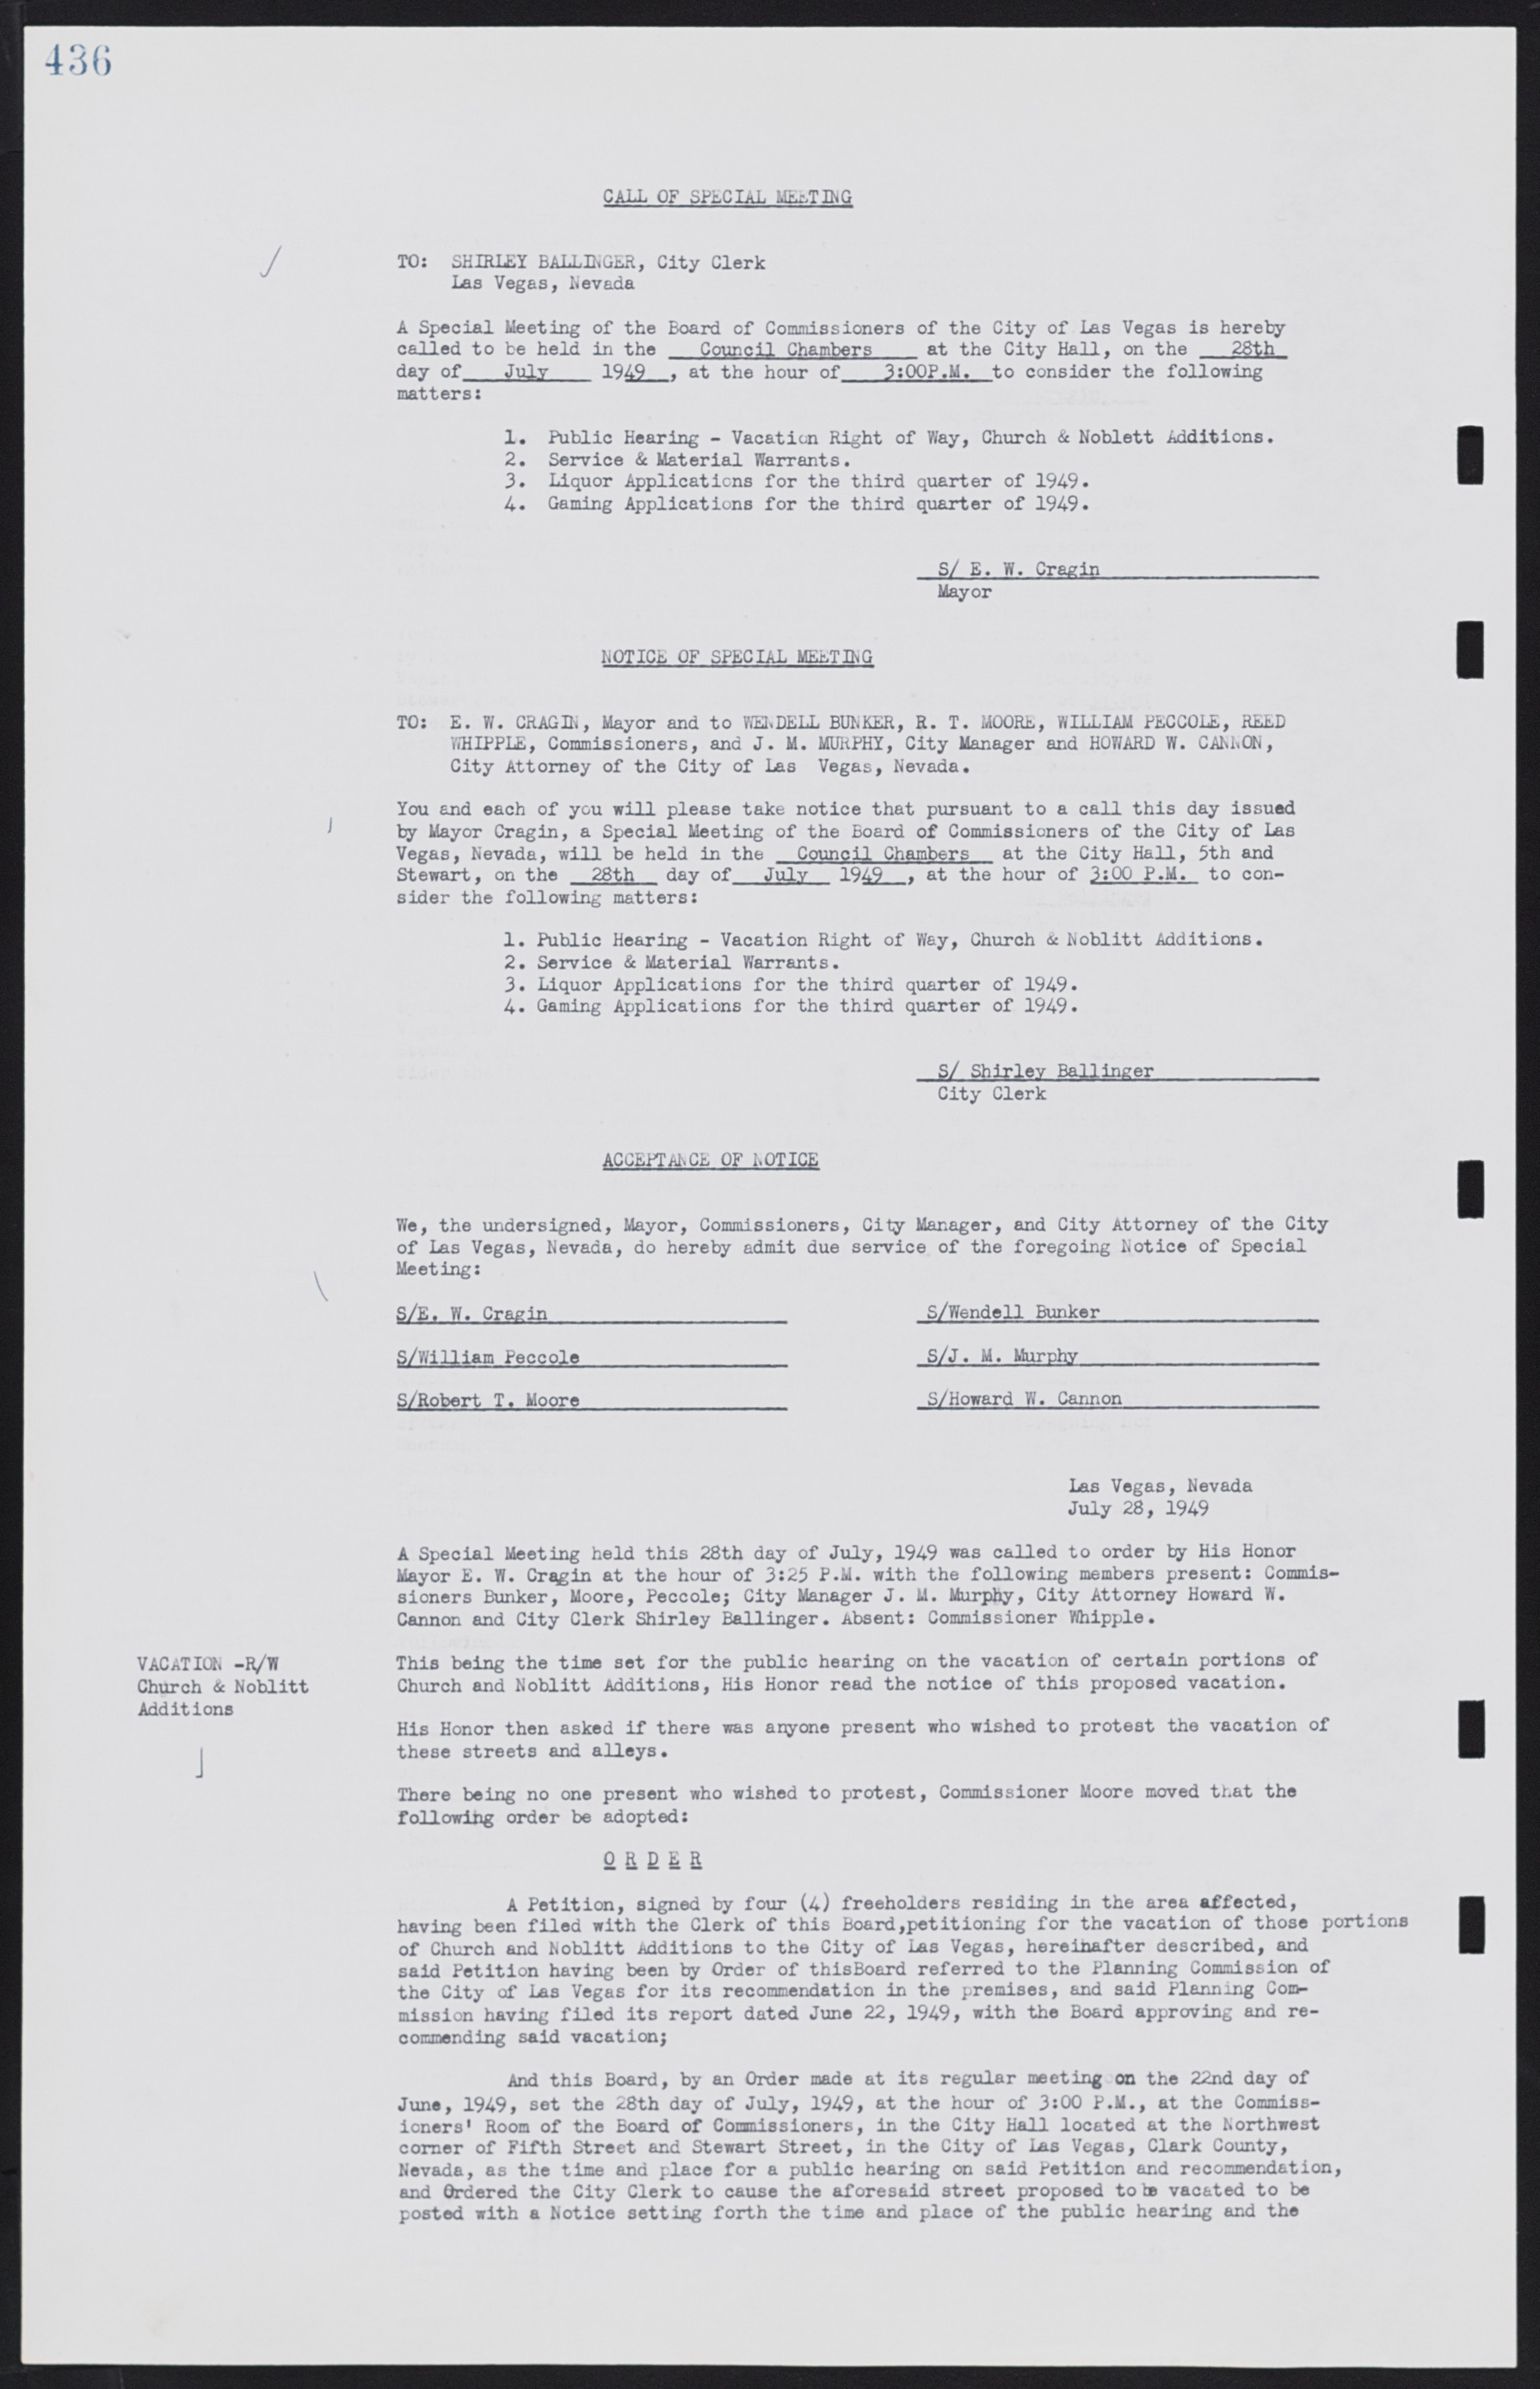 Las Vegas City Commission Minutes, January 7, 1947 to October 26, 1949, lvc000006-468